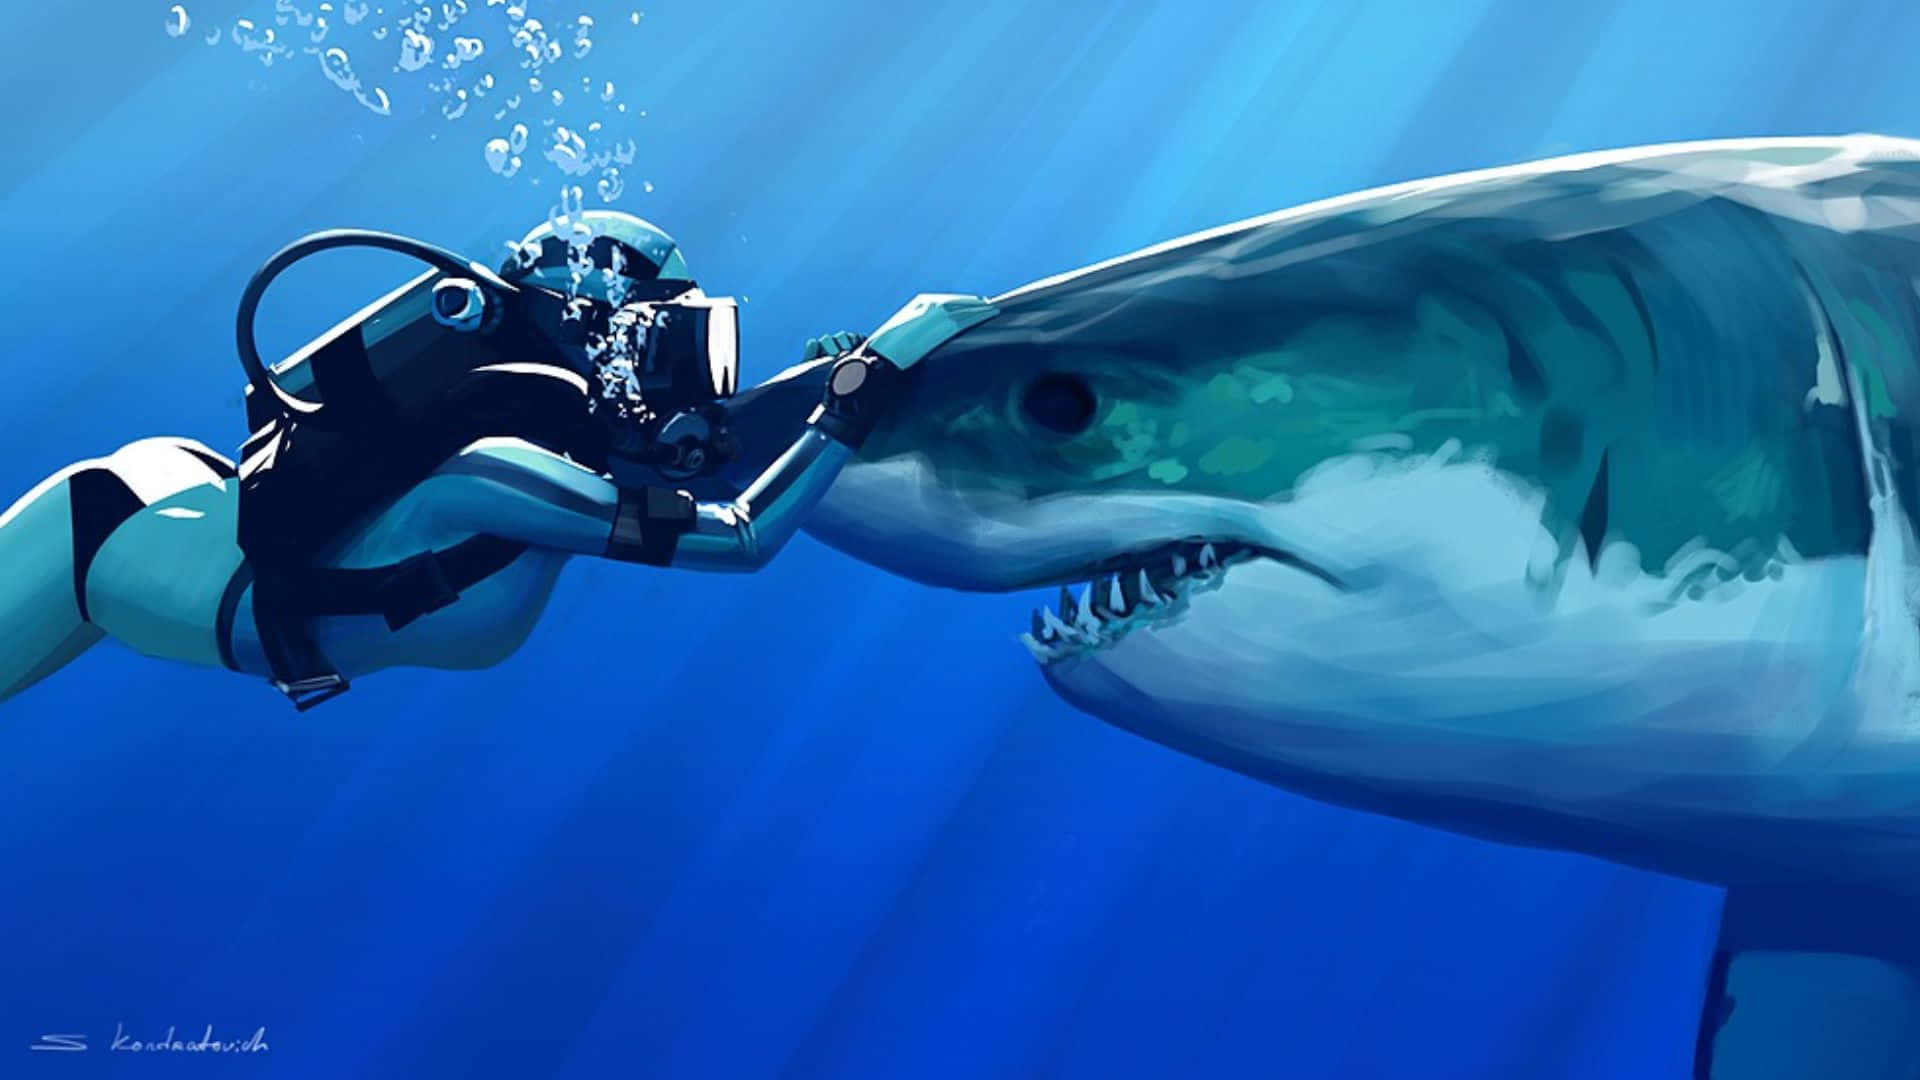 "The Great White Shark: A Powerful Ocean Predator"